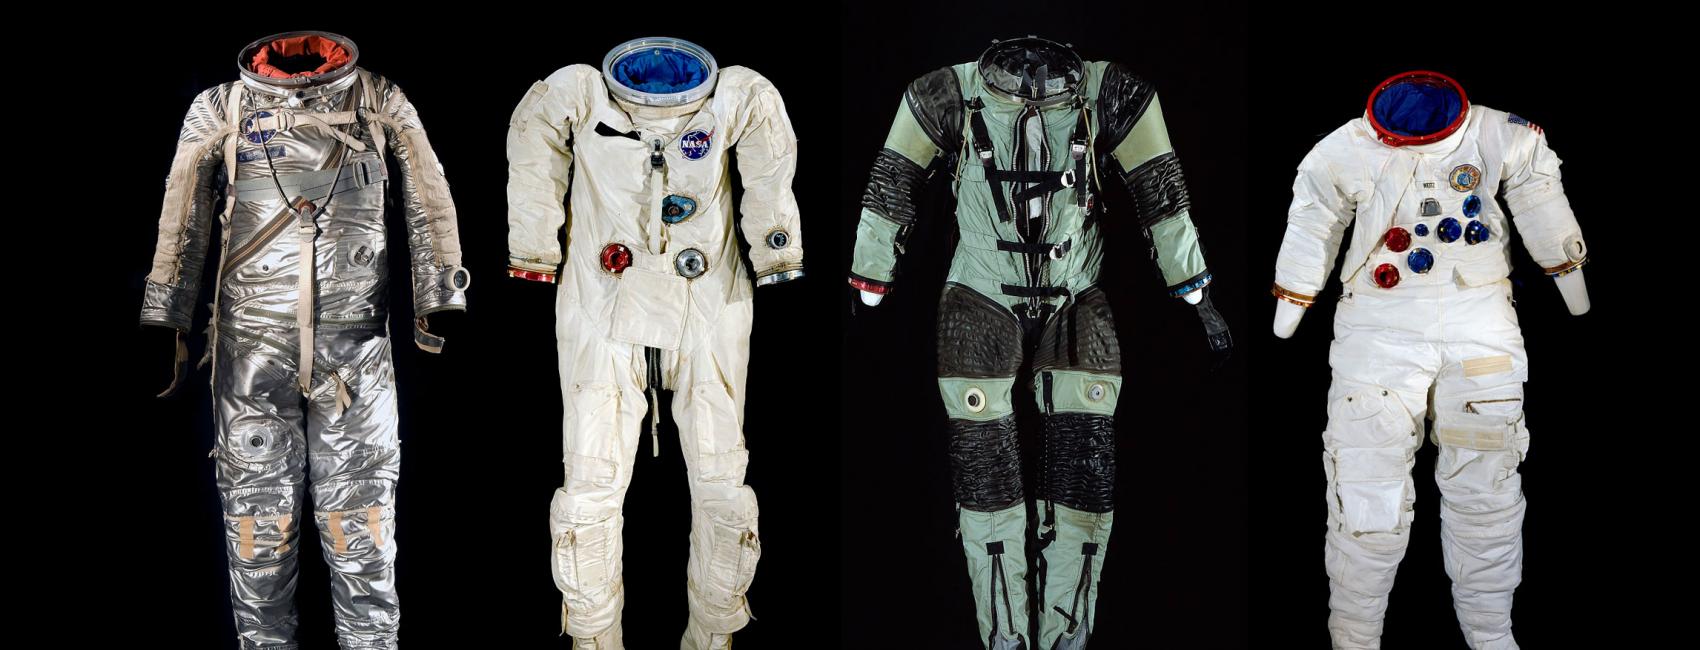 space suit design 2022